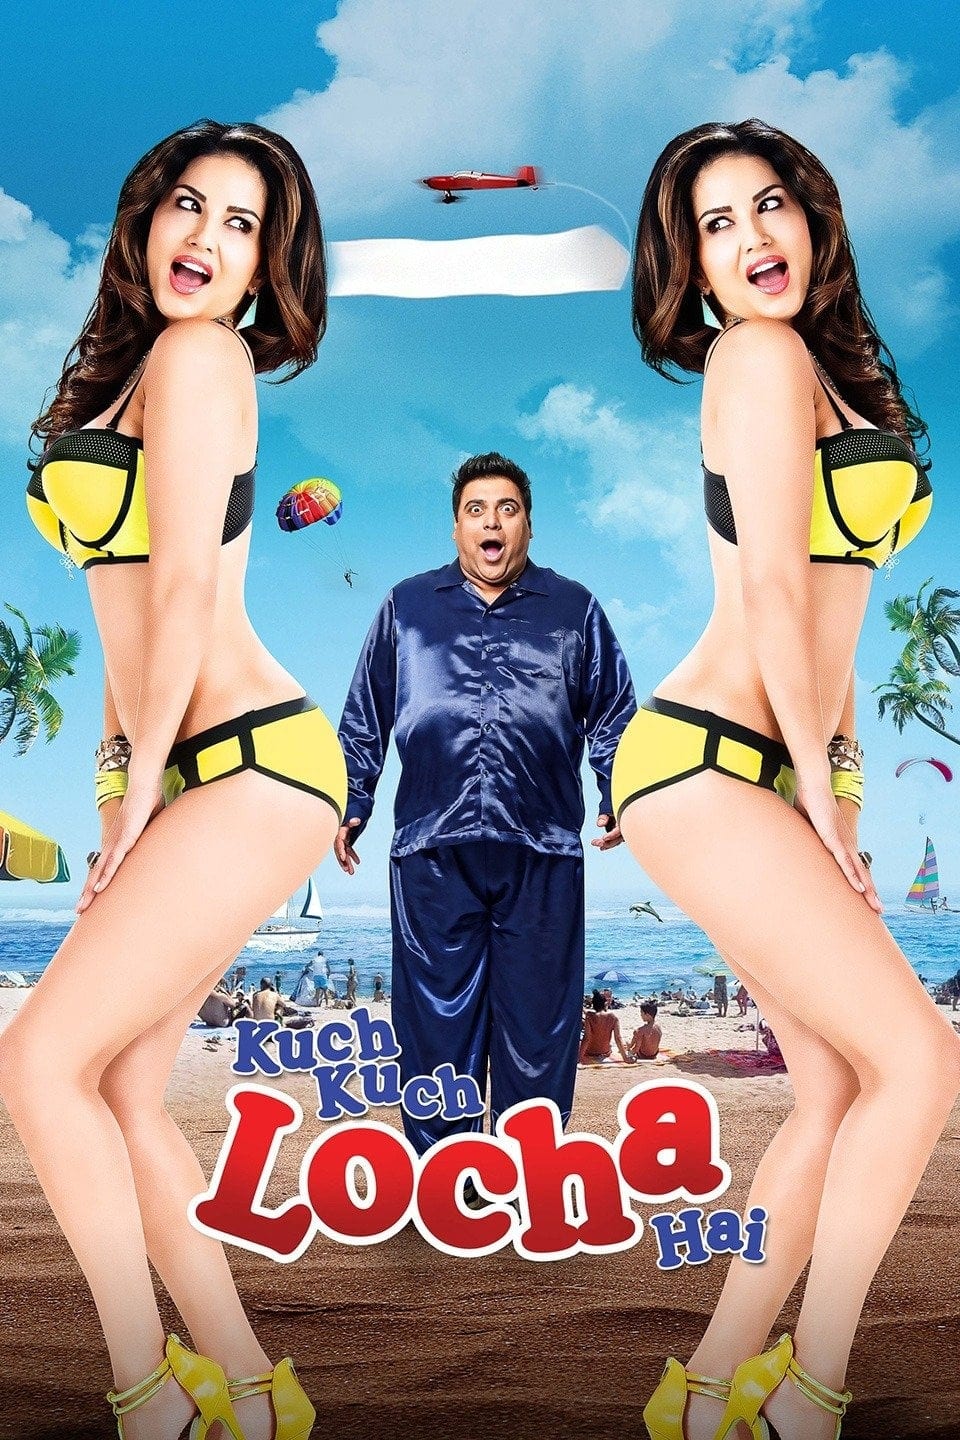 Poster for the movie "Kuch Kuch Locha Hai"